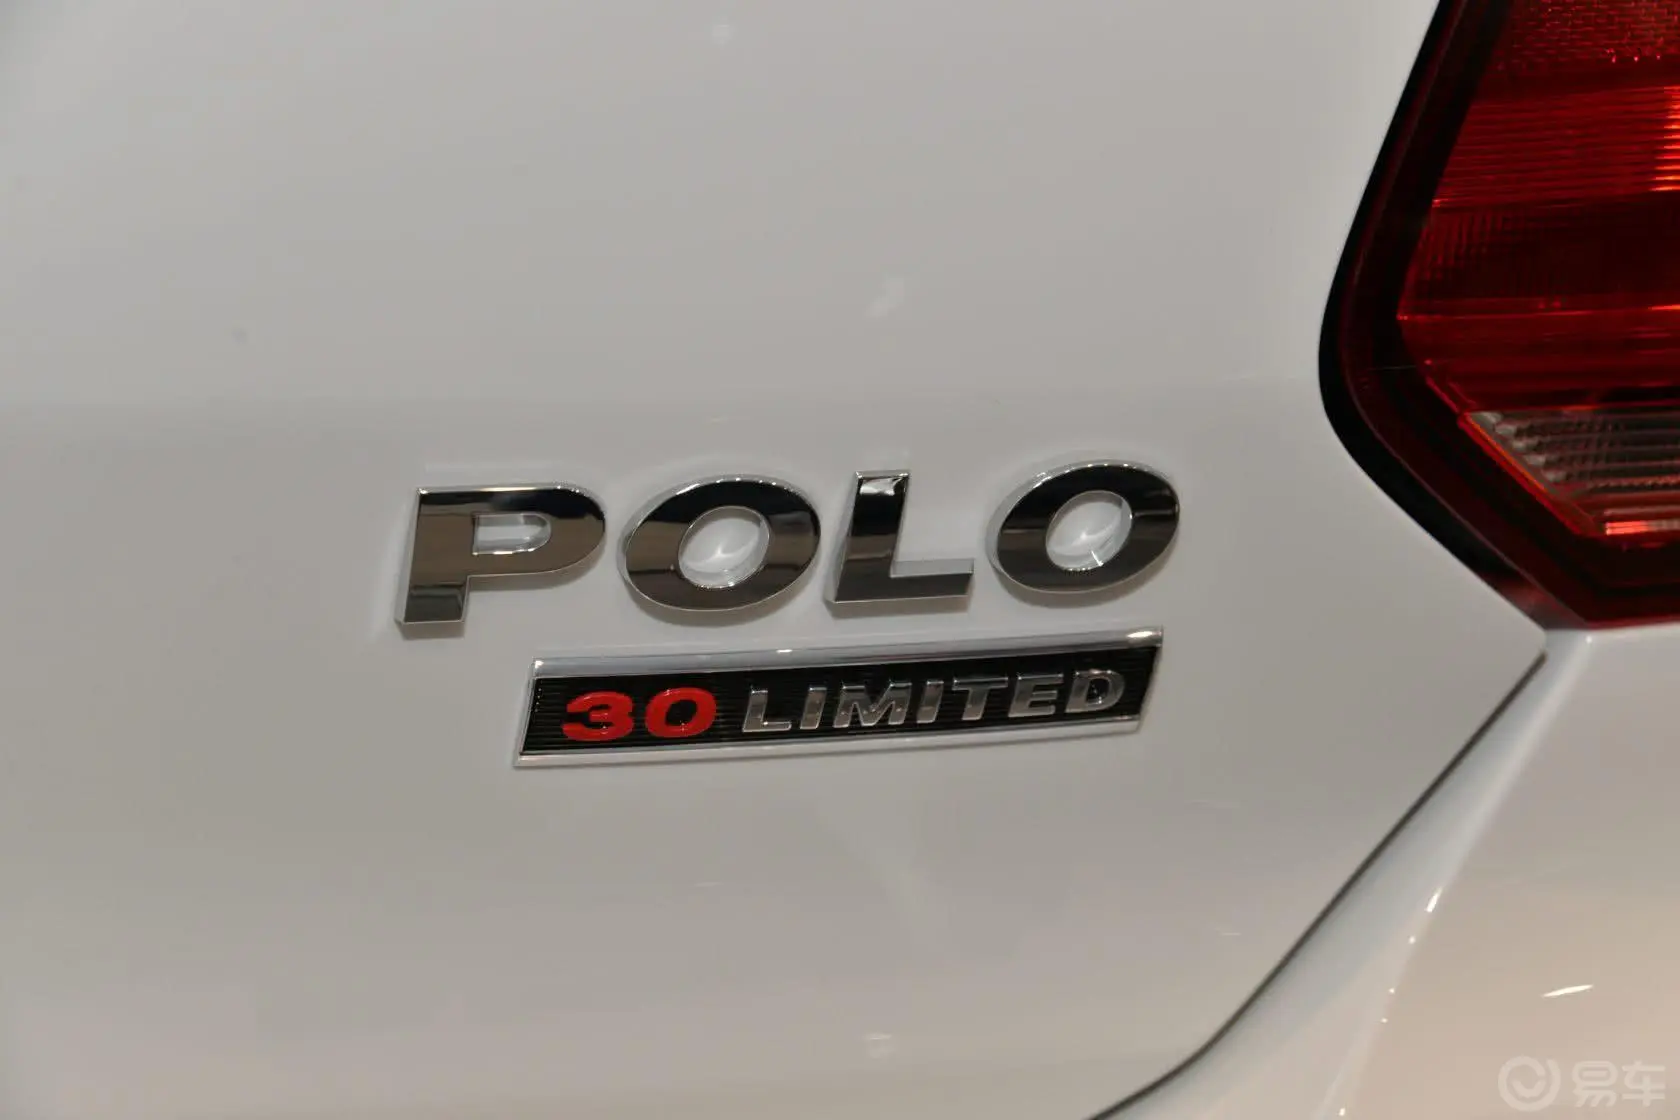 Polo1.6L 自动 30周年纪念版尾标